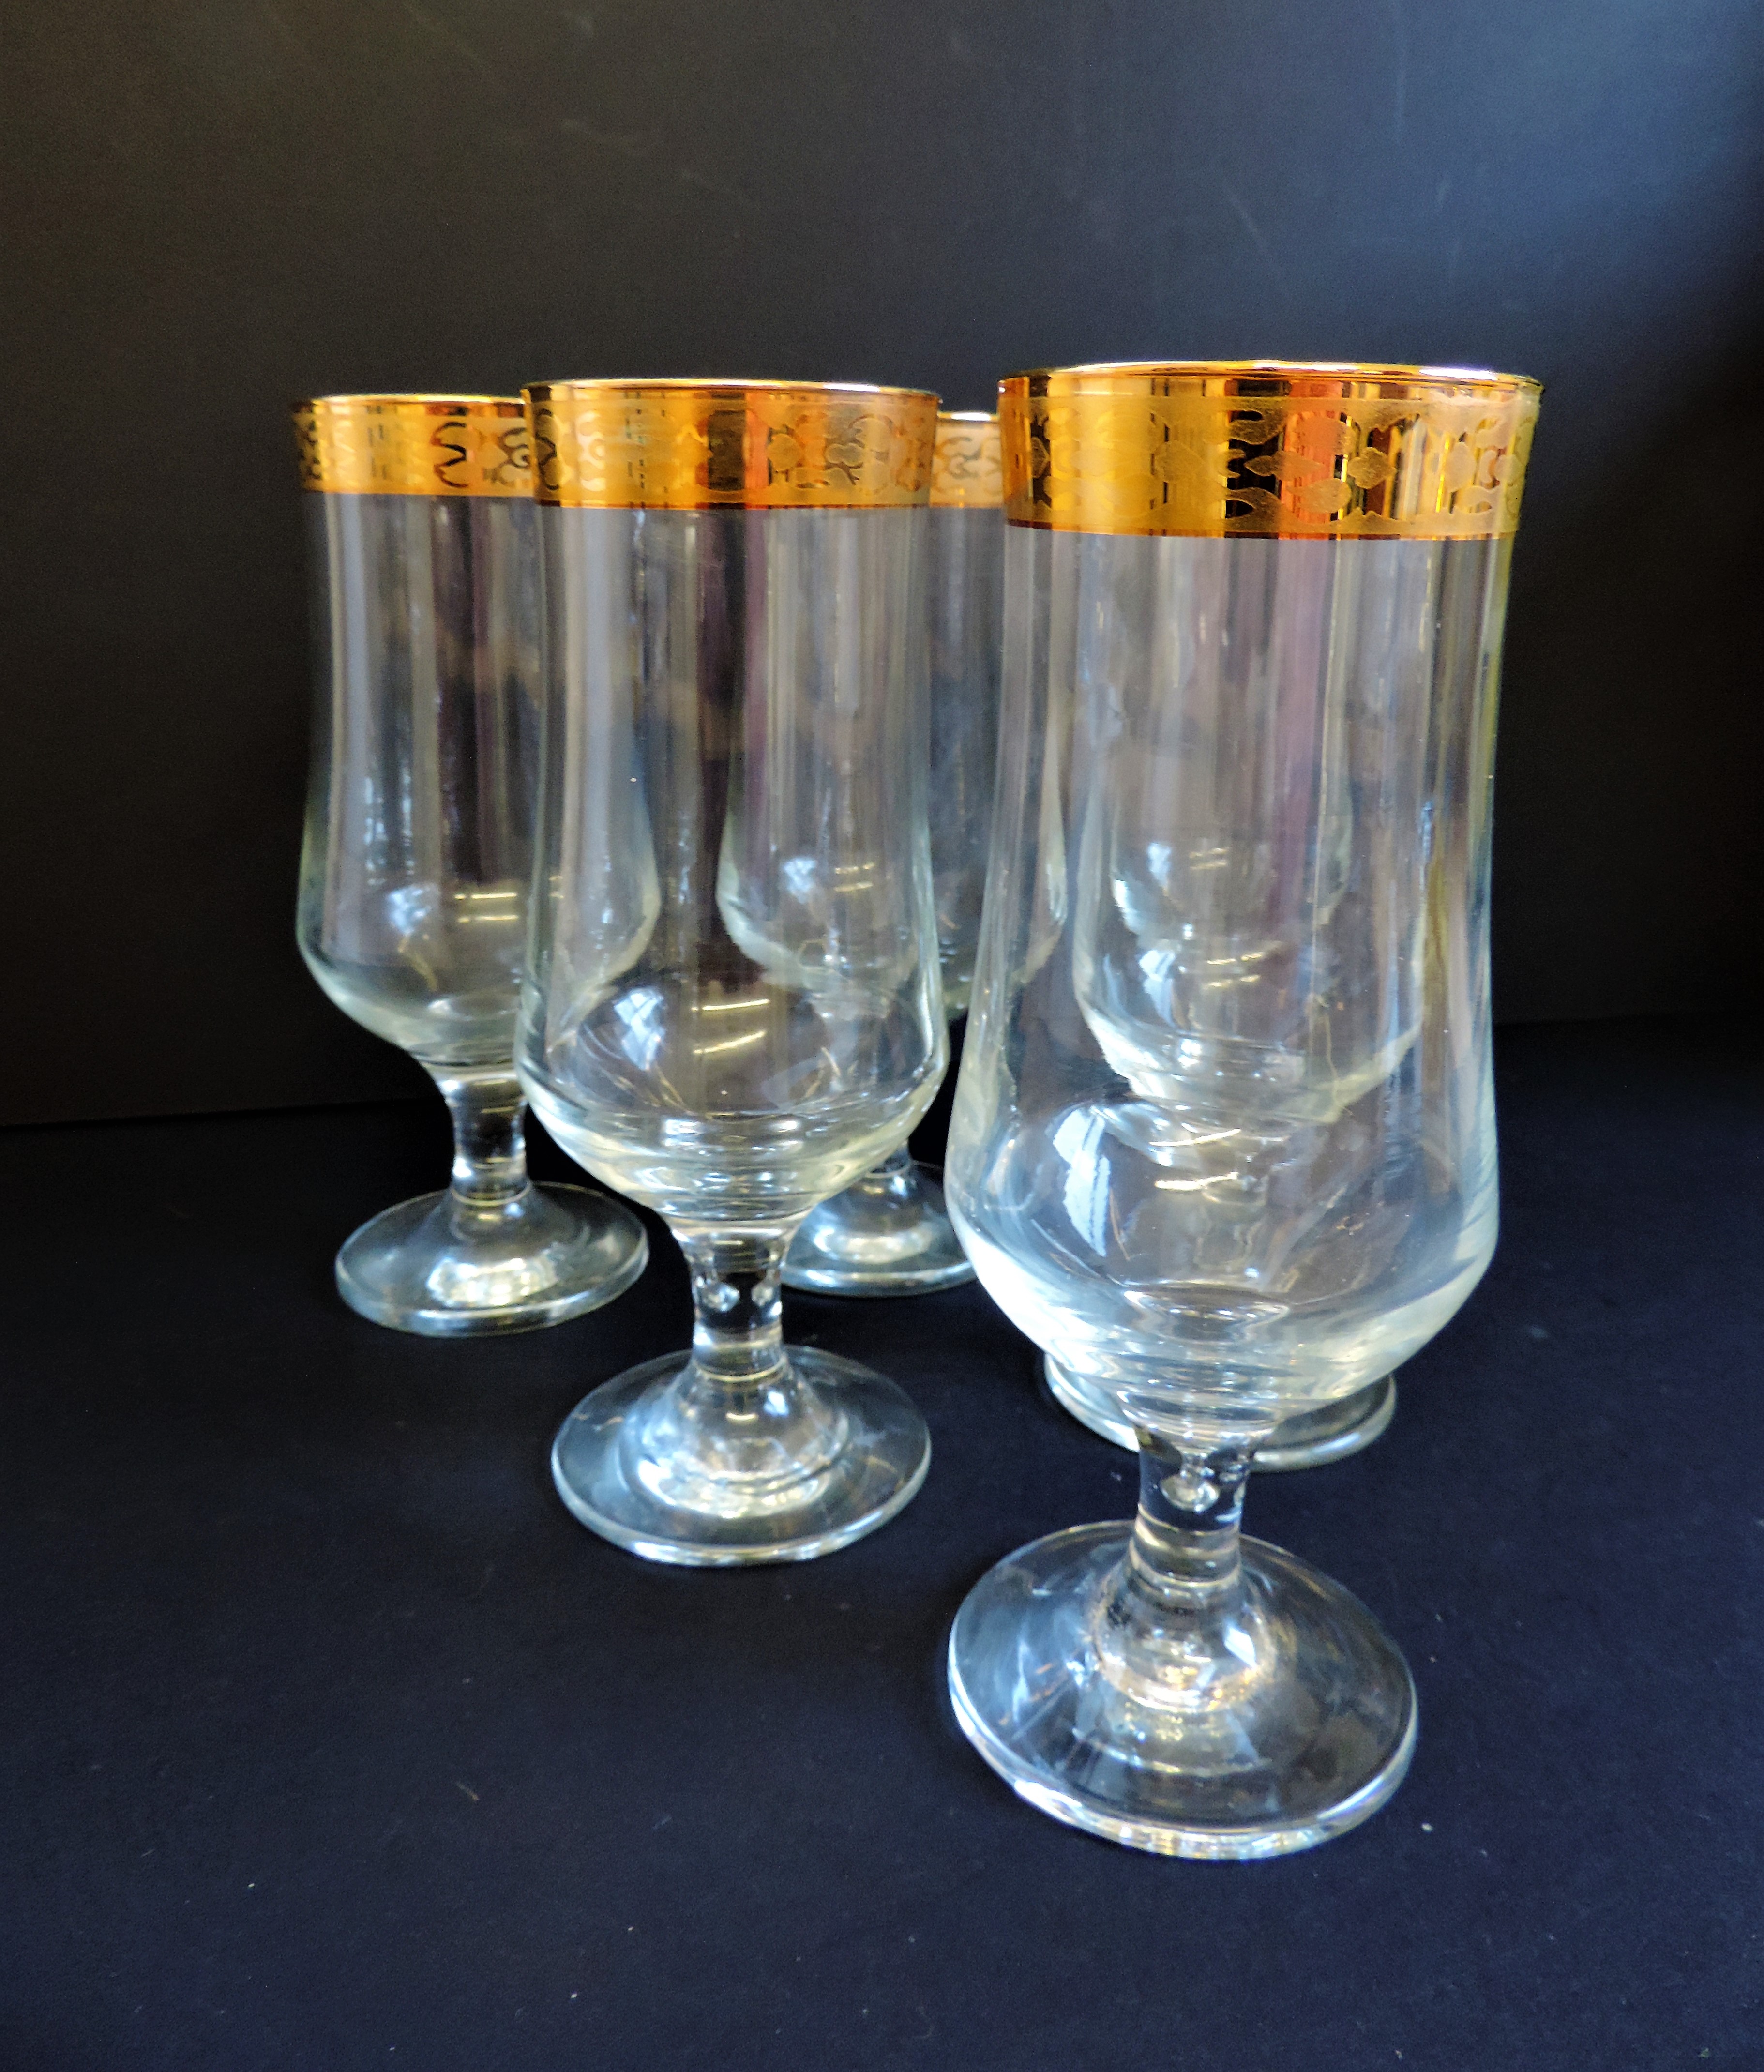 Vintage Venetian gold rimmed tall glasses for cocktails/sprintzers etc - Image 3 of 8